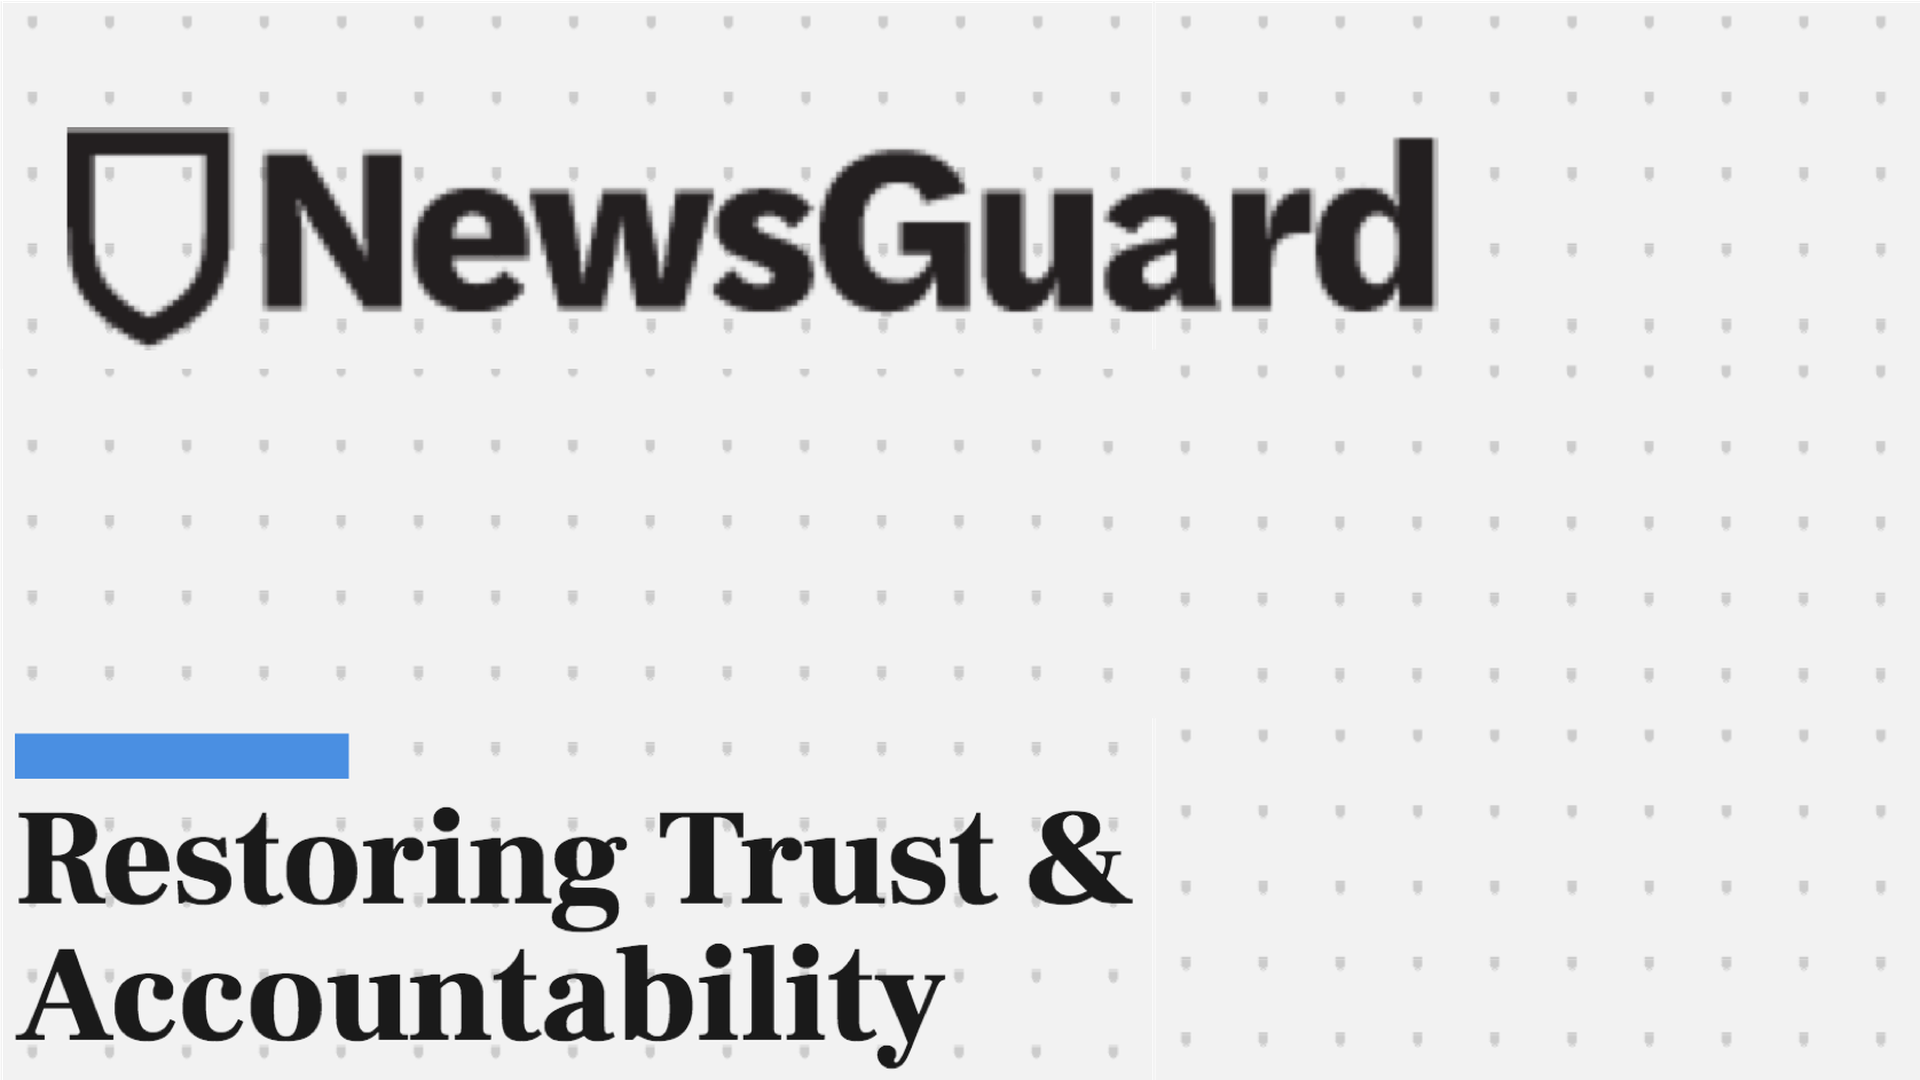 NewsGuard logo